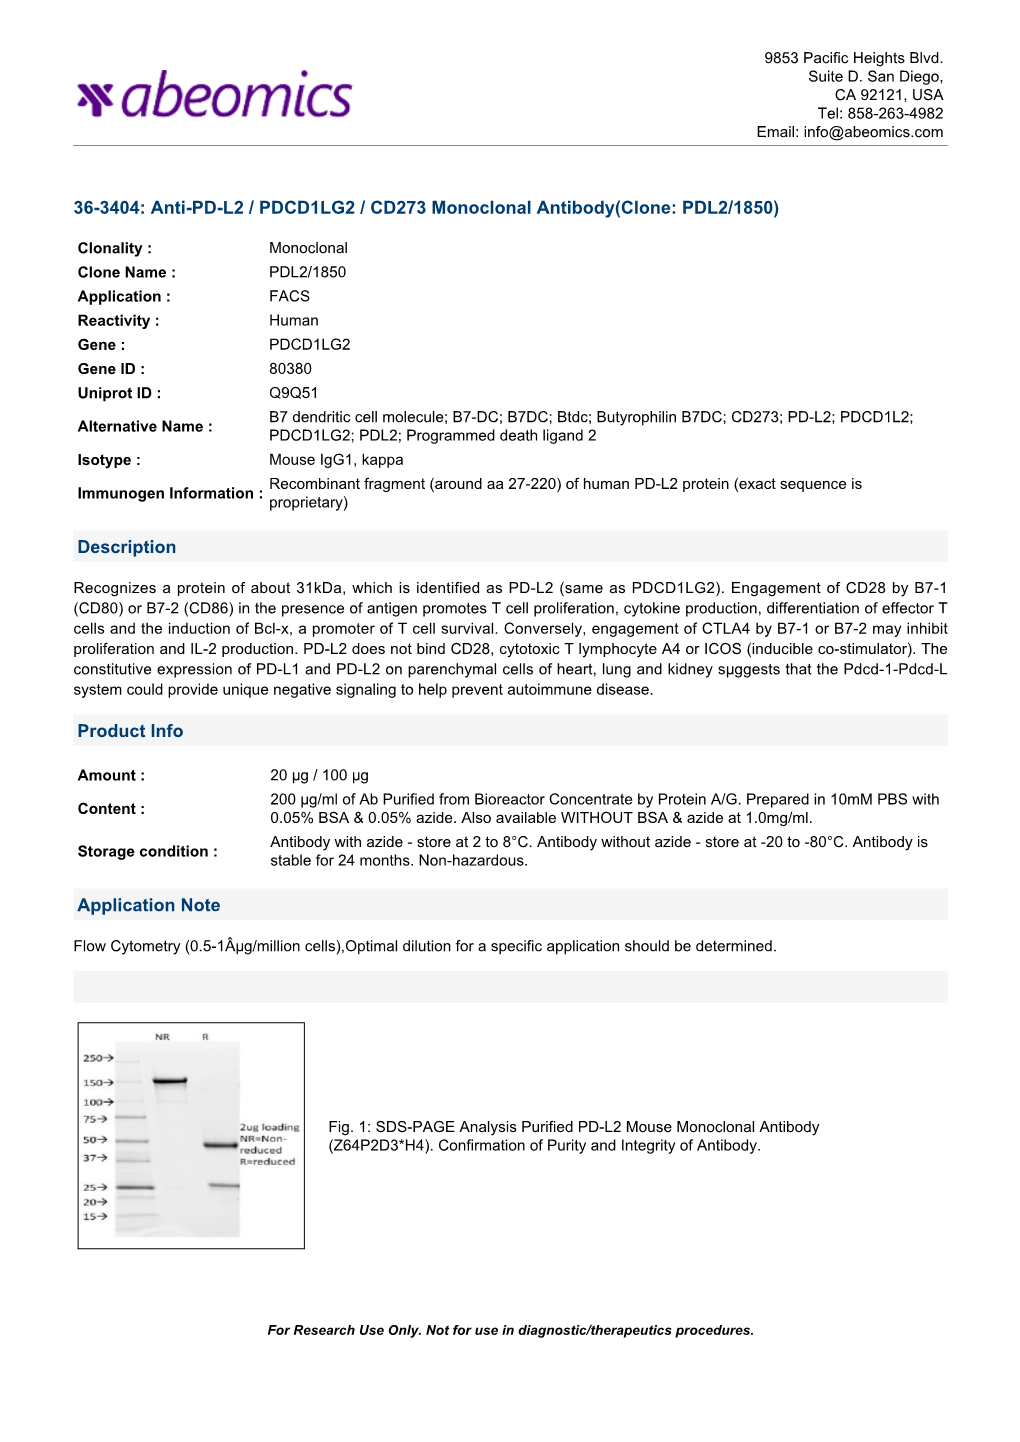 36-3404: Anti-PD-L2 / PDCD1LG2 / CD273 Monoclonal Antibody(Clone: PDL2/1850)